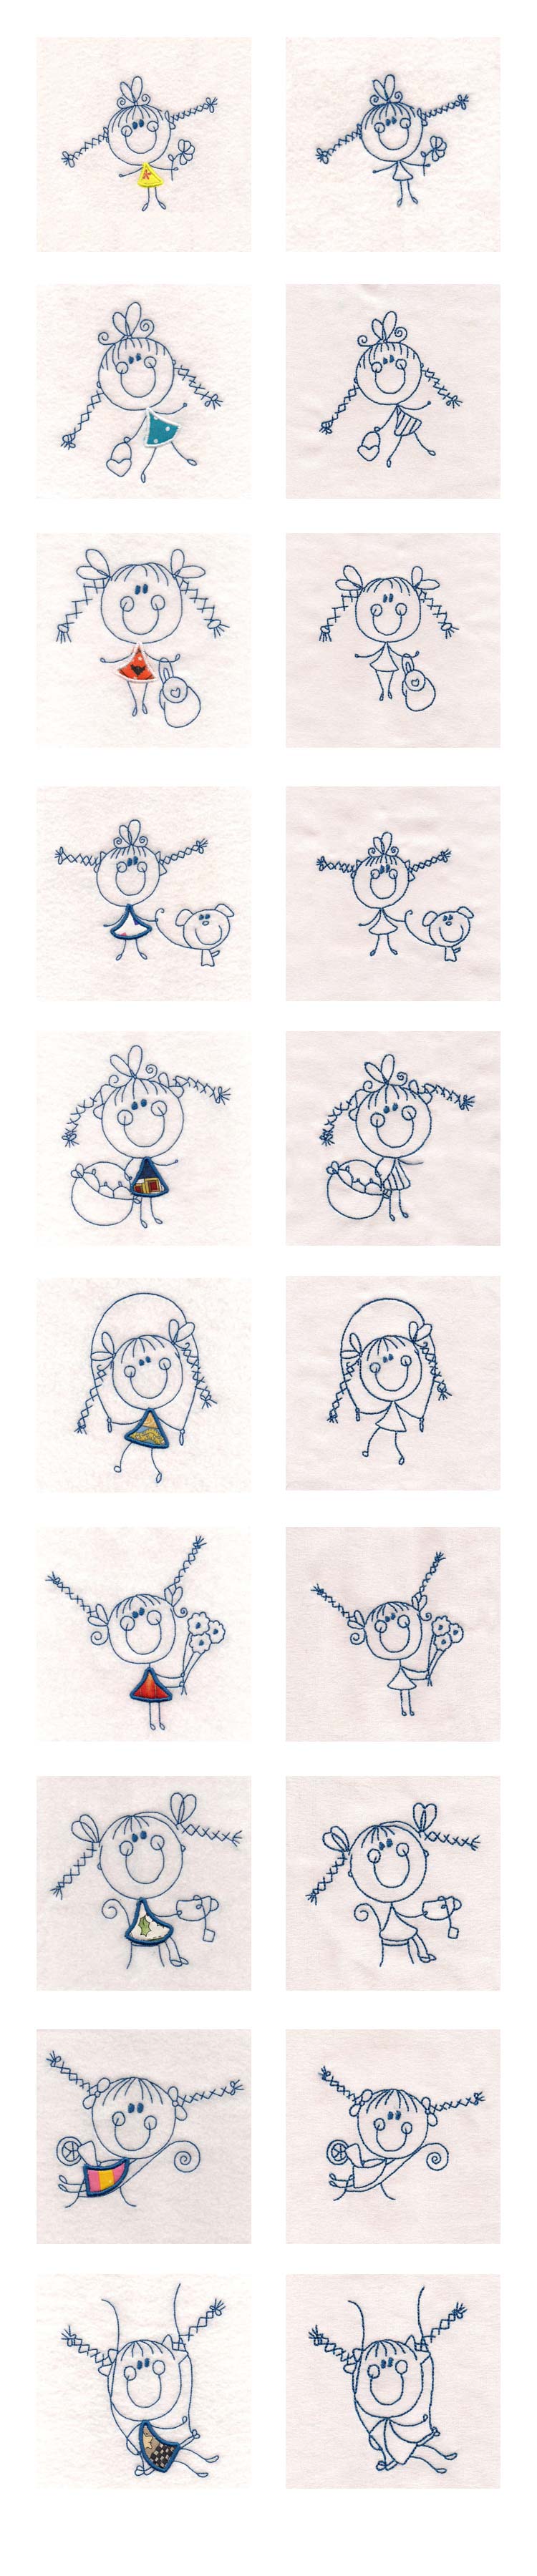 Sticky Fun Girls Embroidery Machine Design Details